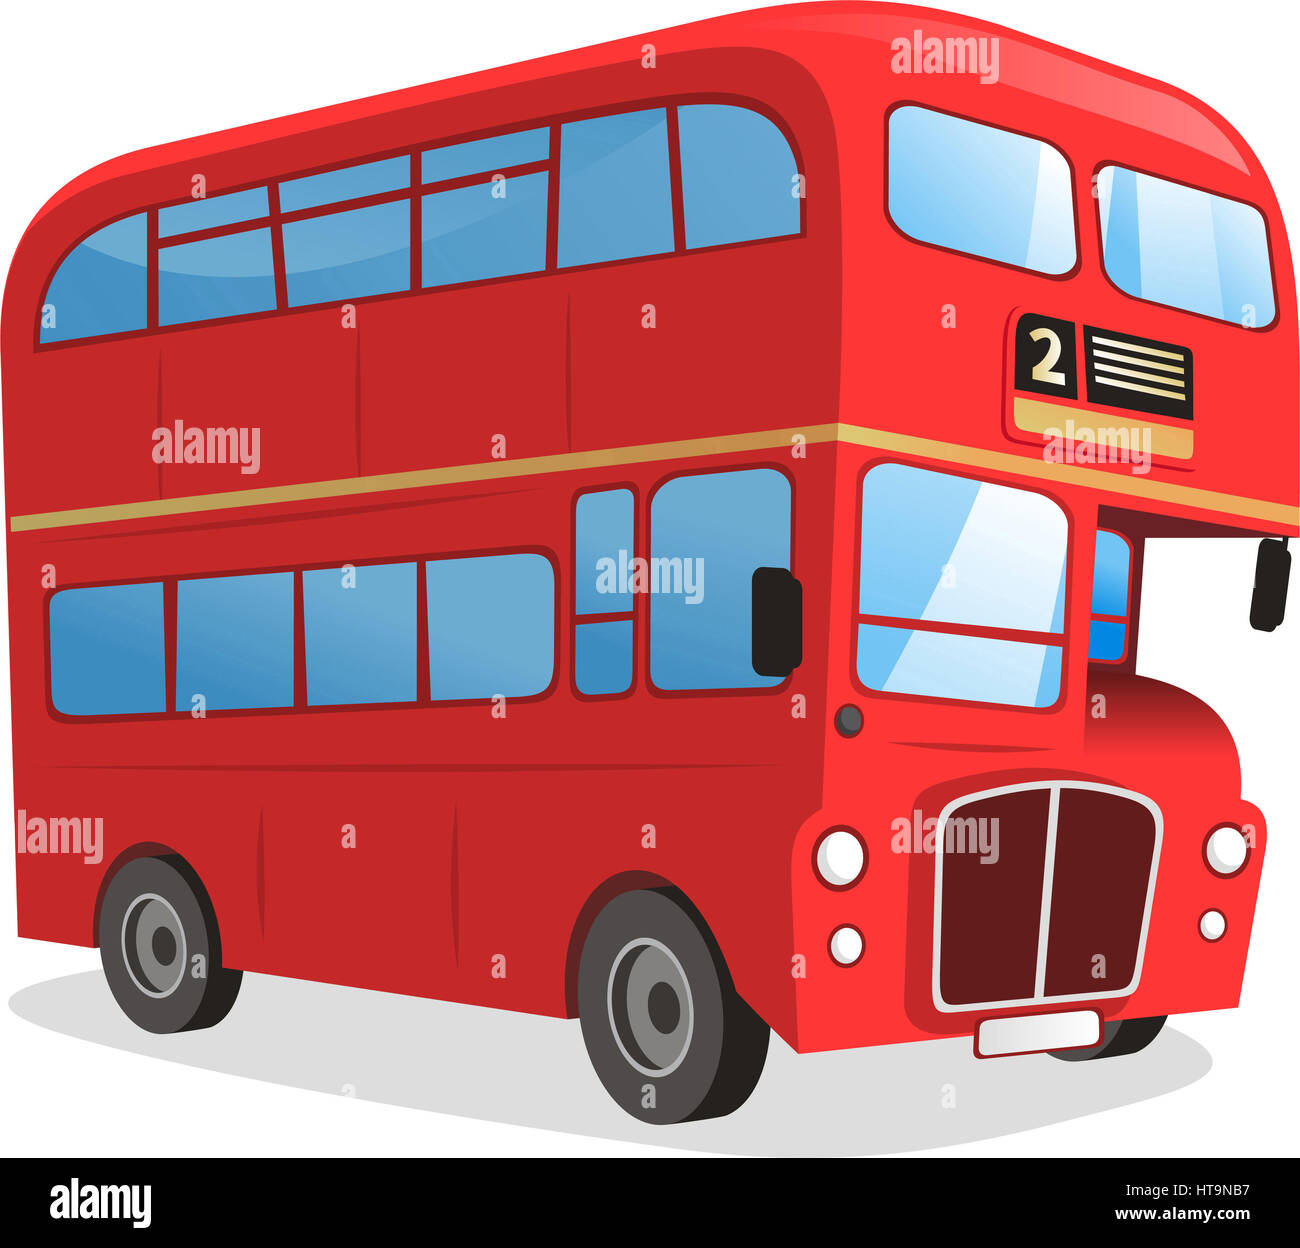 London Double decker bus cartoon illustration Stock Photo